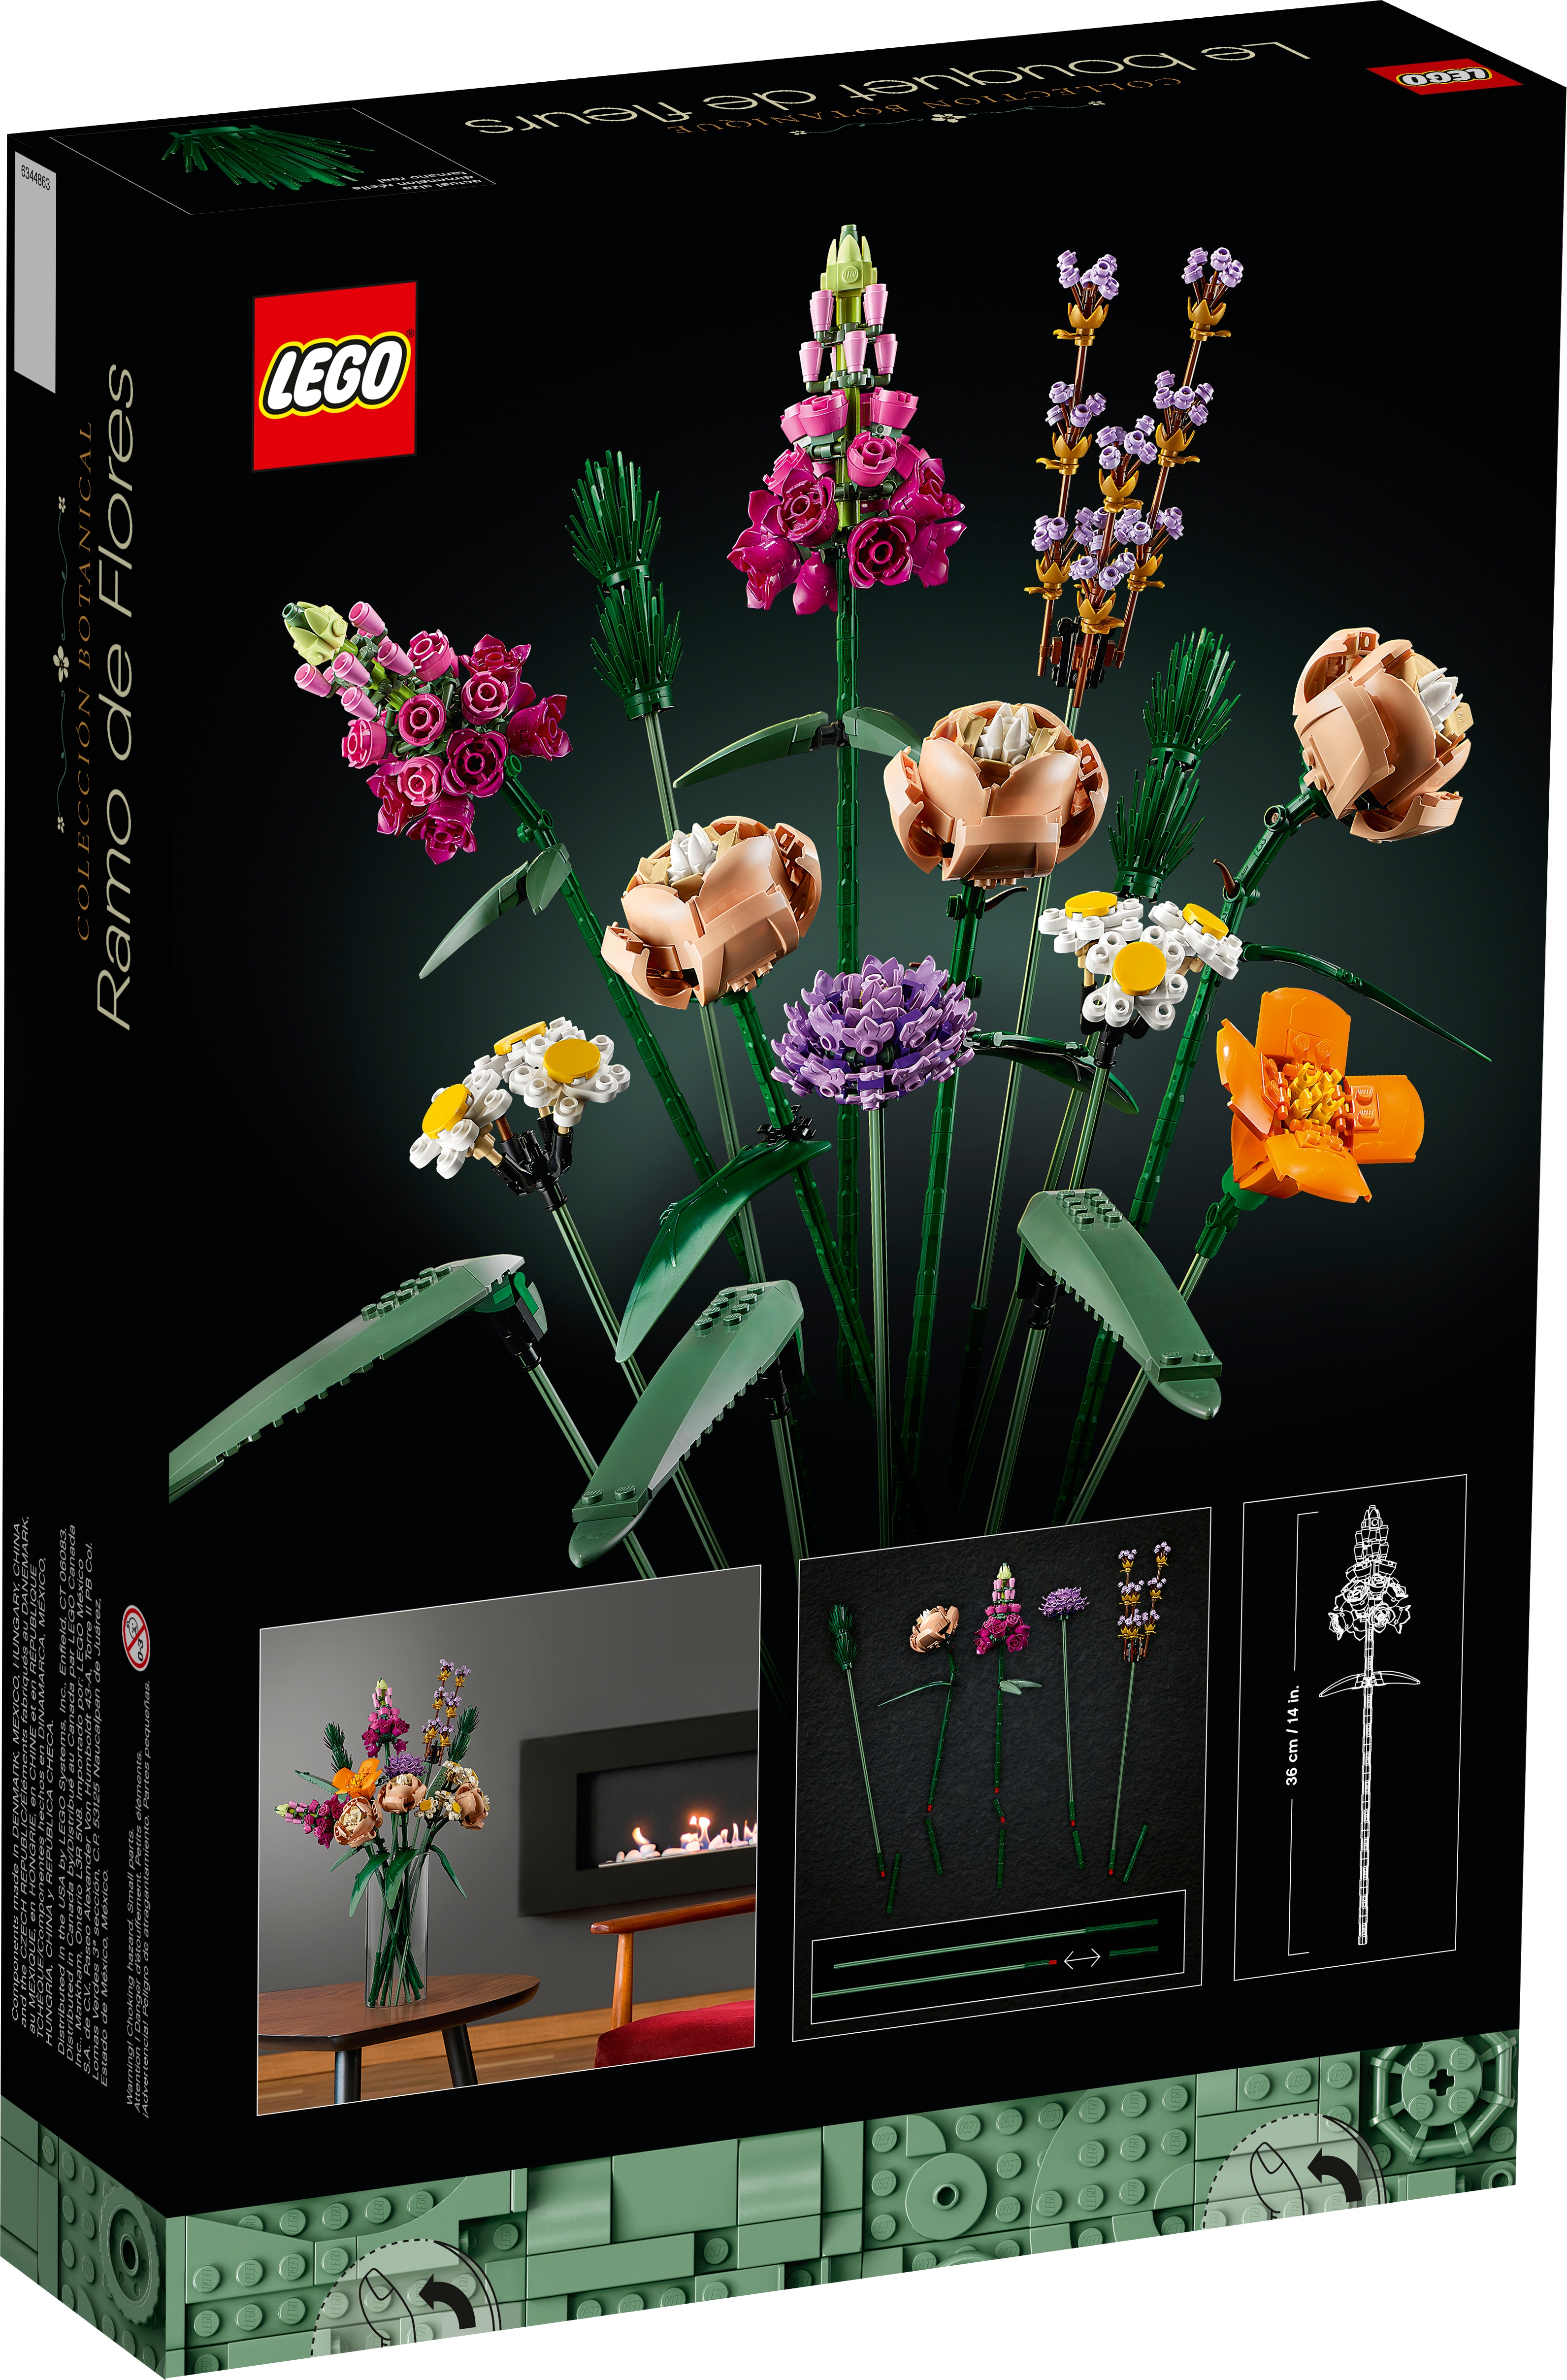 New Details about   LEGO Botanical Collection Flower Bouquet Building Kit 10280 756 Pieces